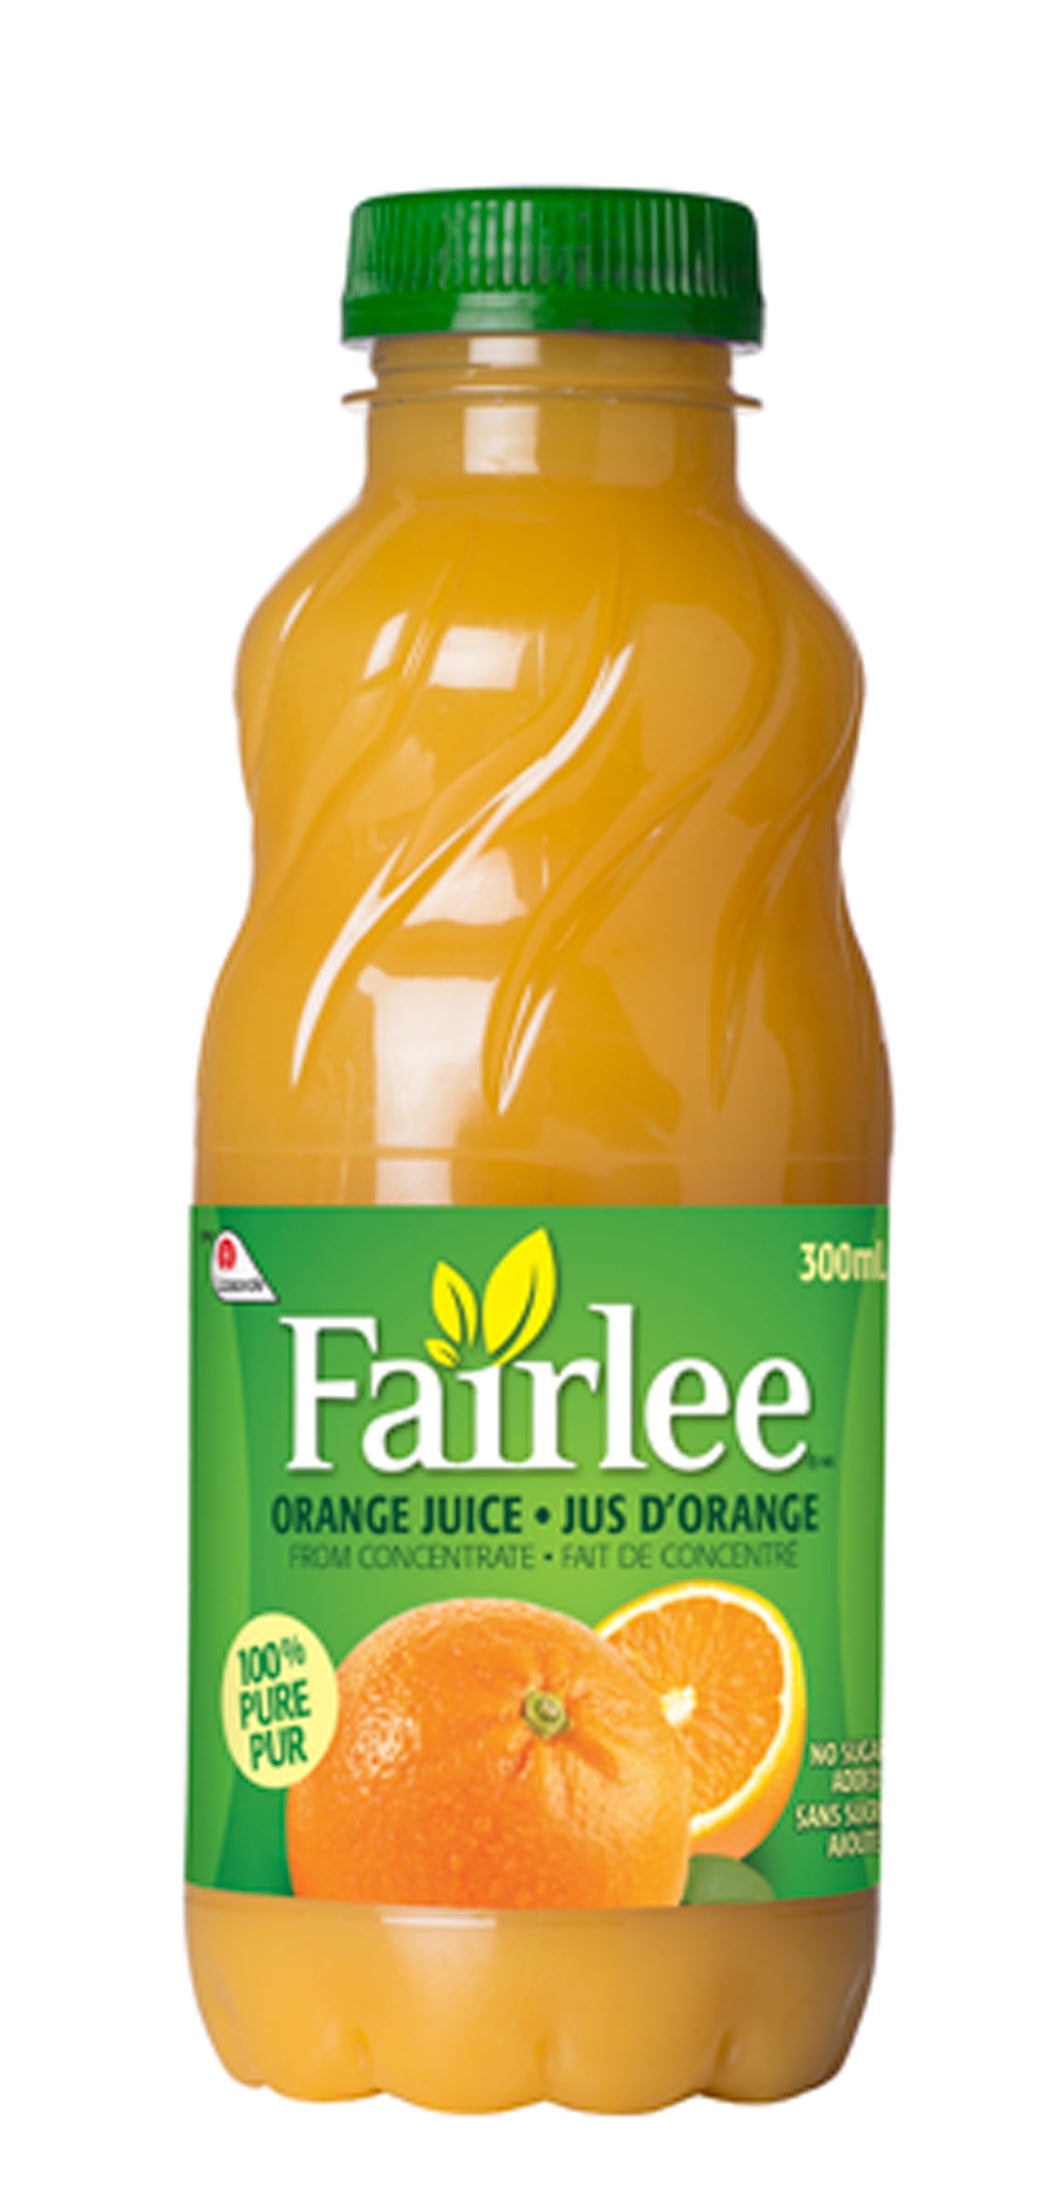 Fairlee Orange Juice - 300ml